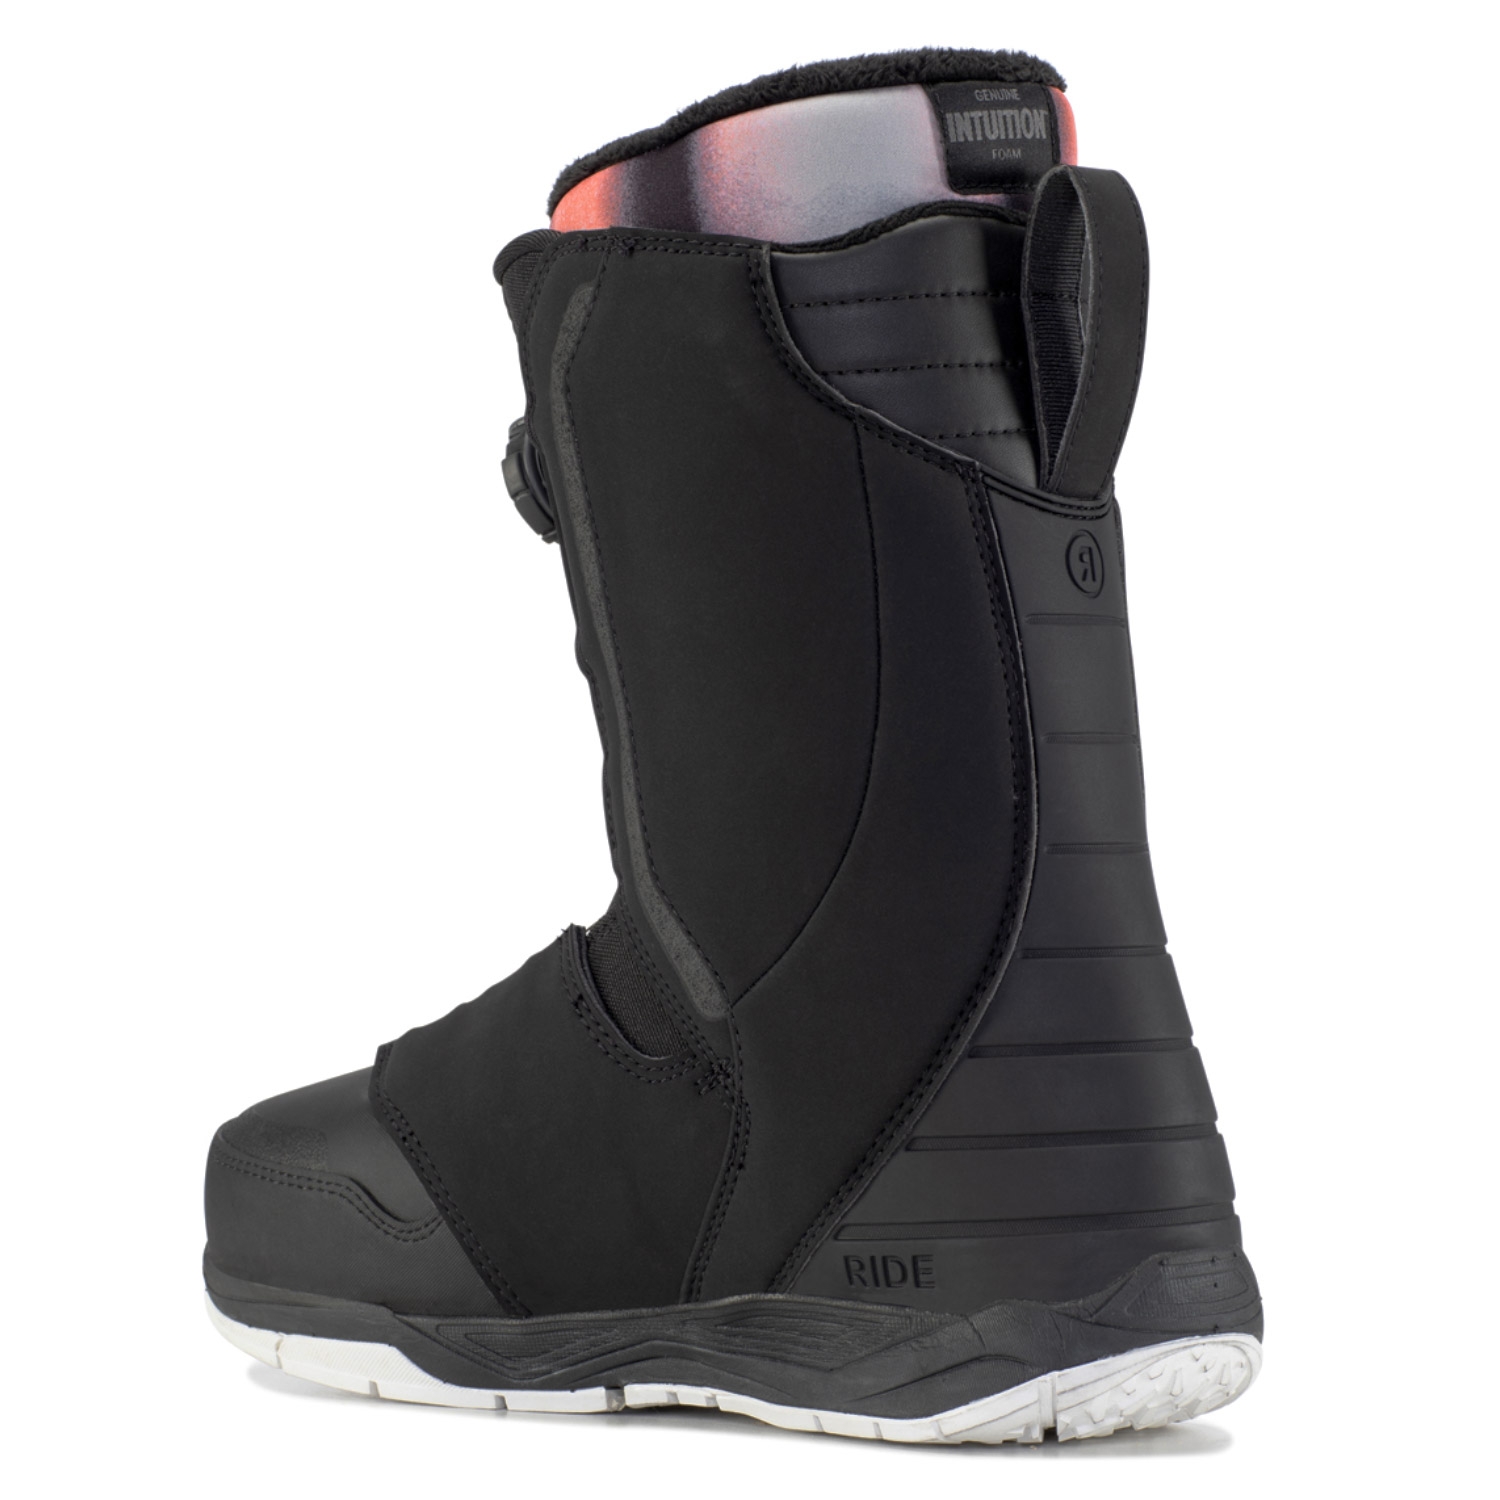 Ride Lasso Pro Snowbard Boots Black 2021